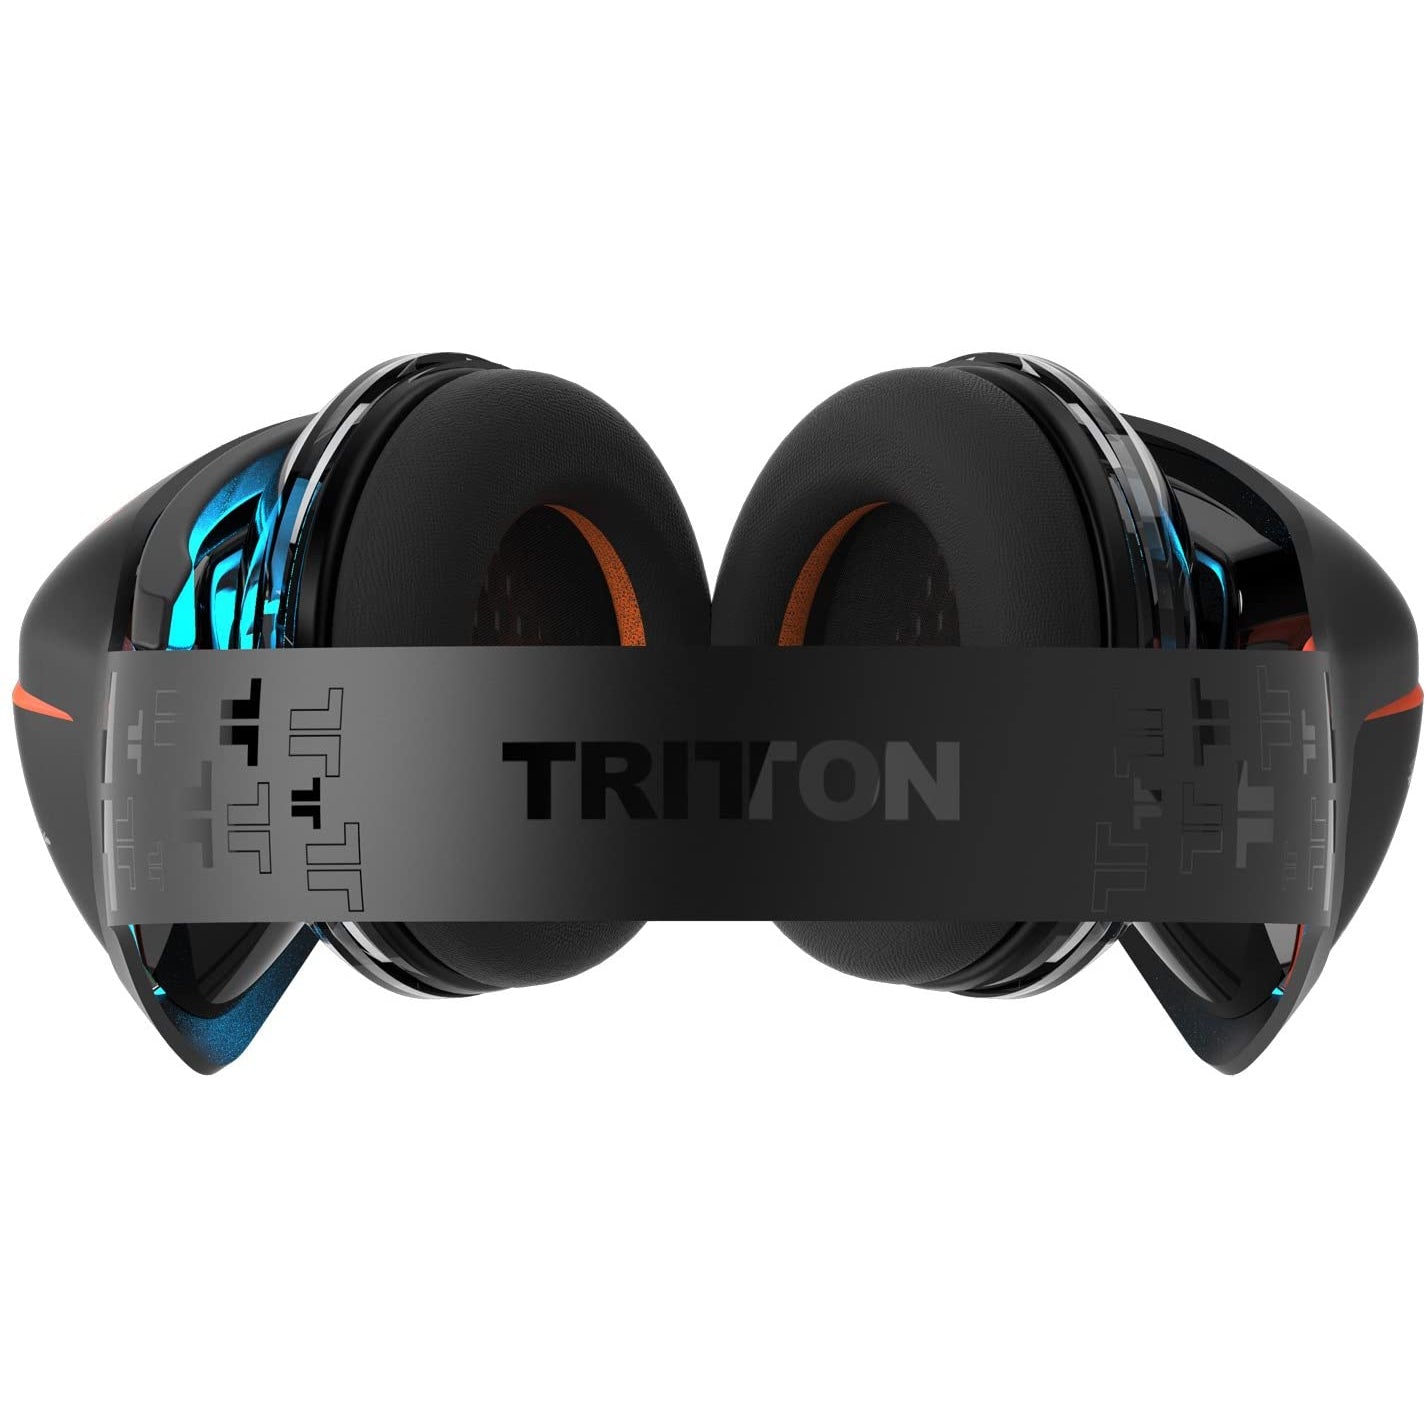 Tritton ARK 100 Stereo Headset - Black PS4 + Nintendo Switch